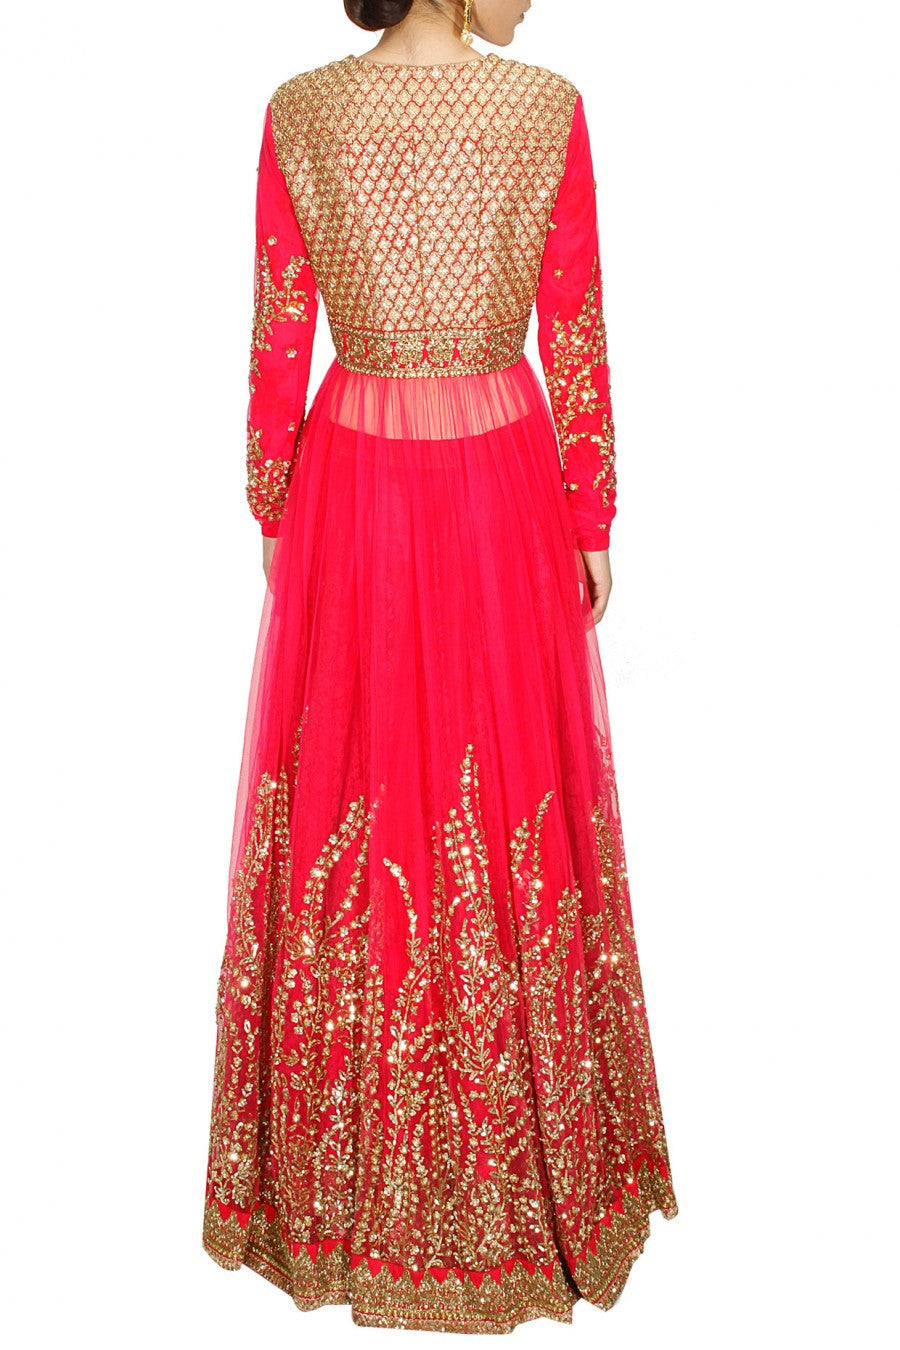 Ruby Red Embroidered Lehenga Sari Set | Ritika Mirchandani – KYNAH